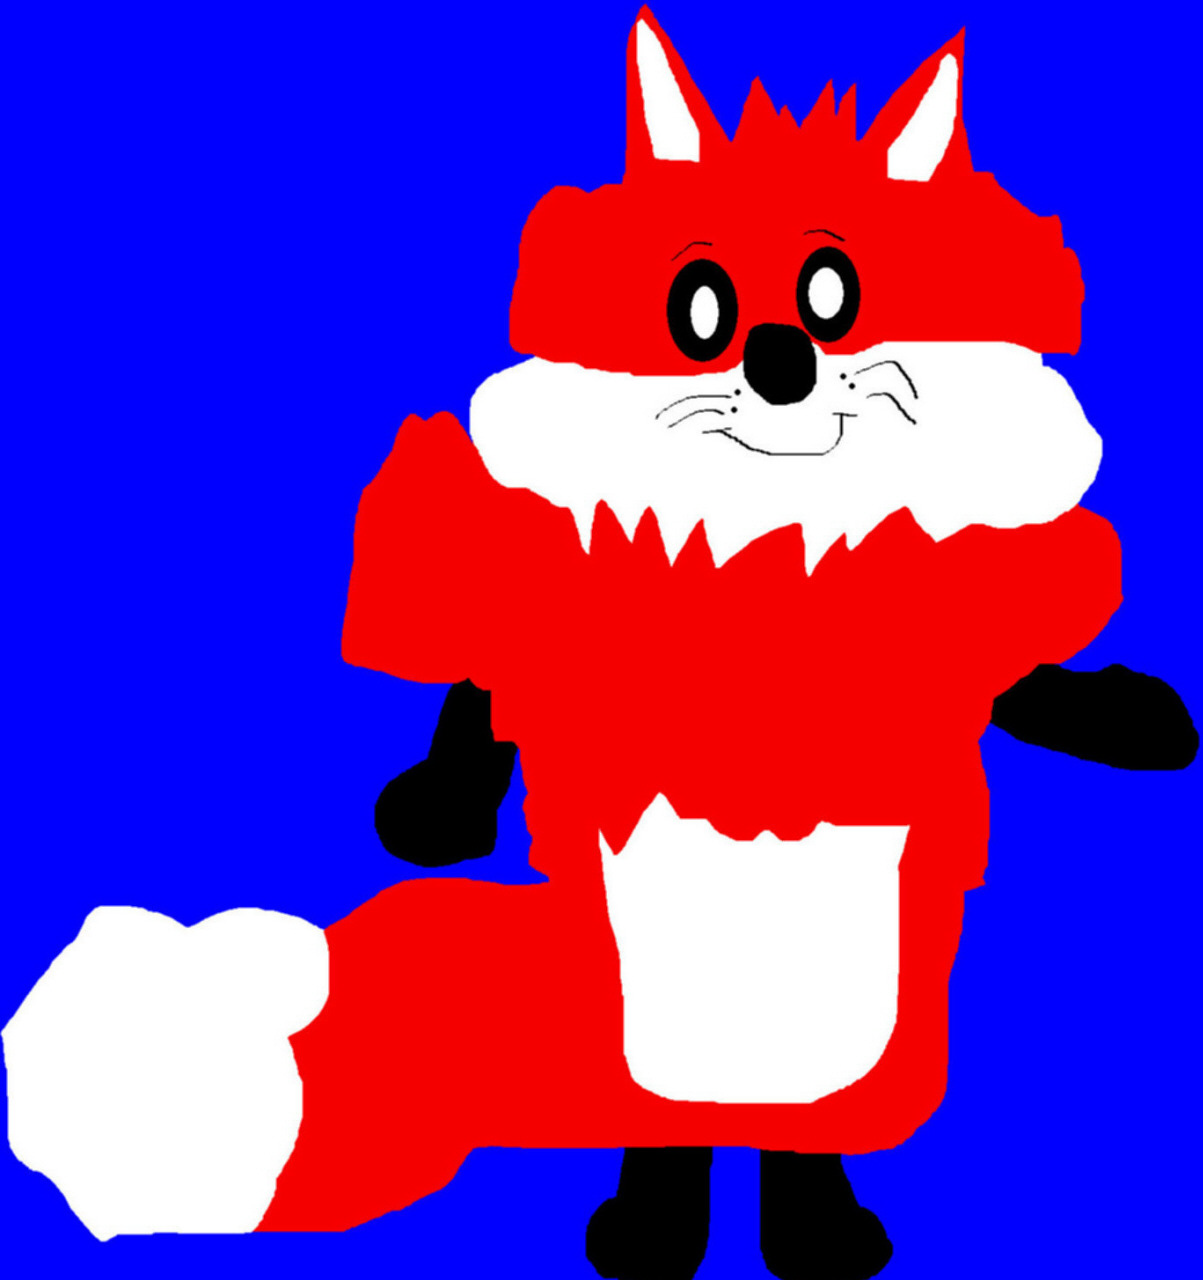 Fluffy Circo Fox Plush MS Paint Red Version^0^ by Falconlobo